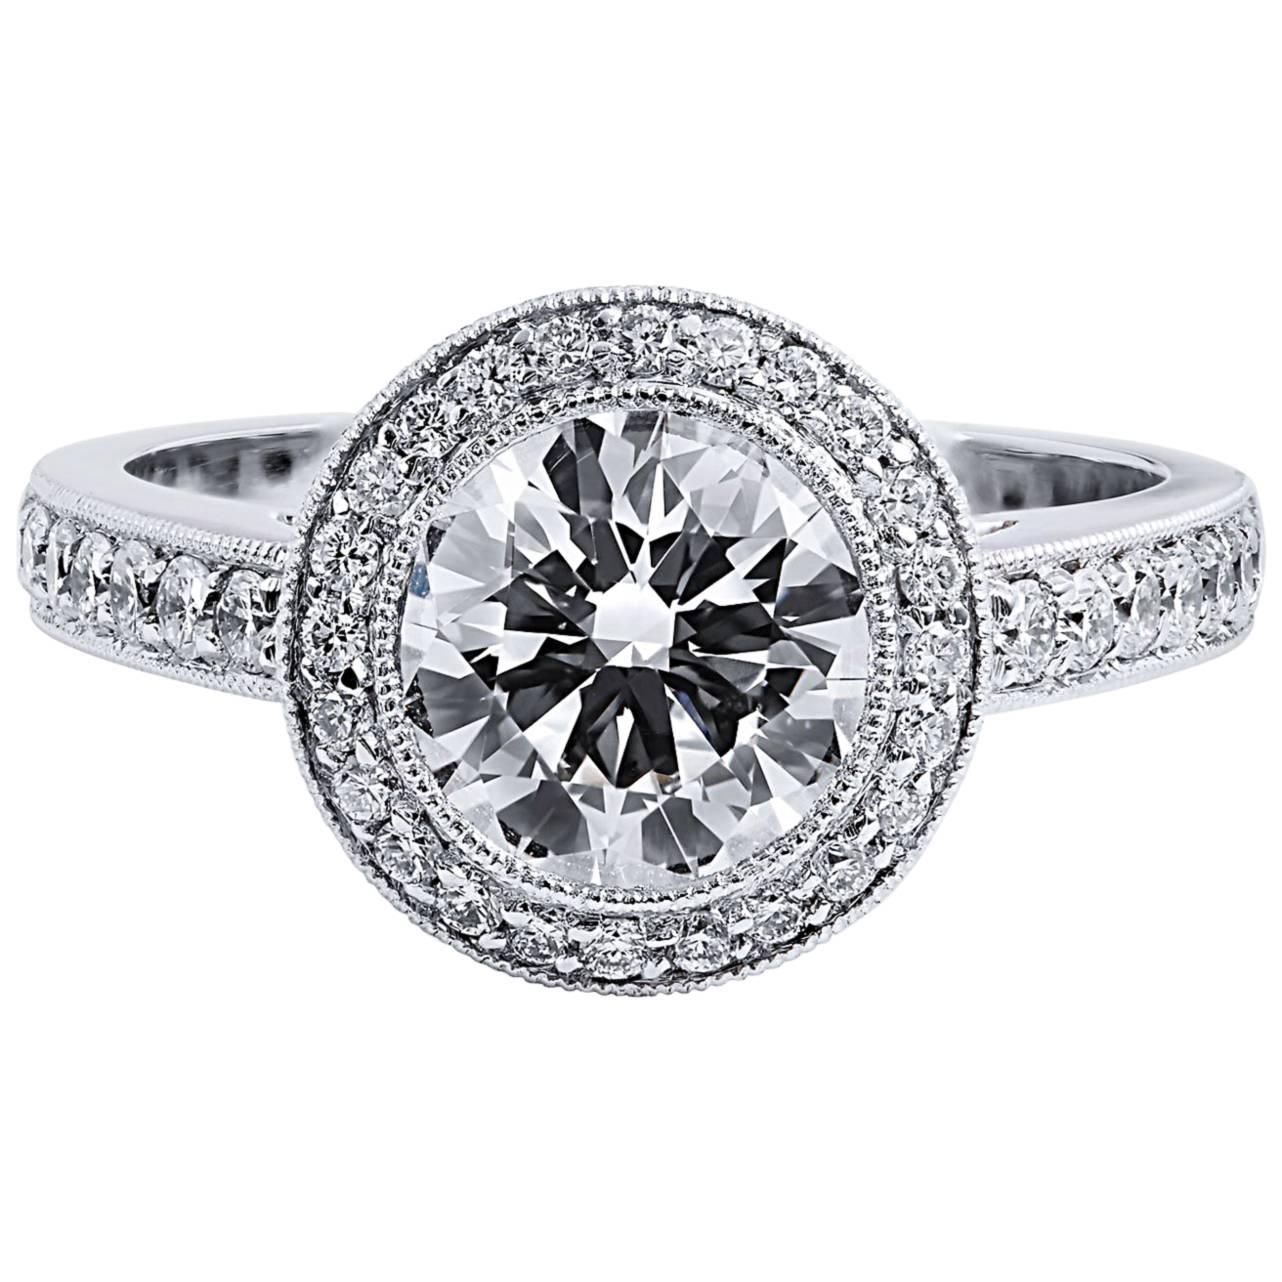 GIA CERTIFIED 1.53 Carat Round Brilliant Cut Halo Set Diamond Engagement Ring